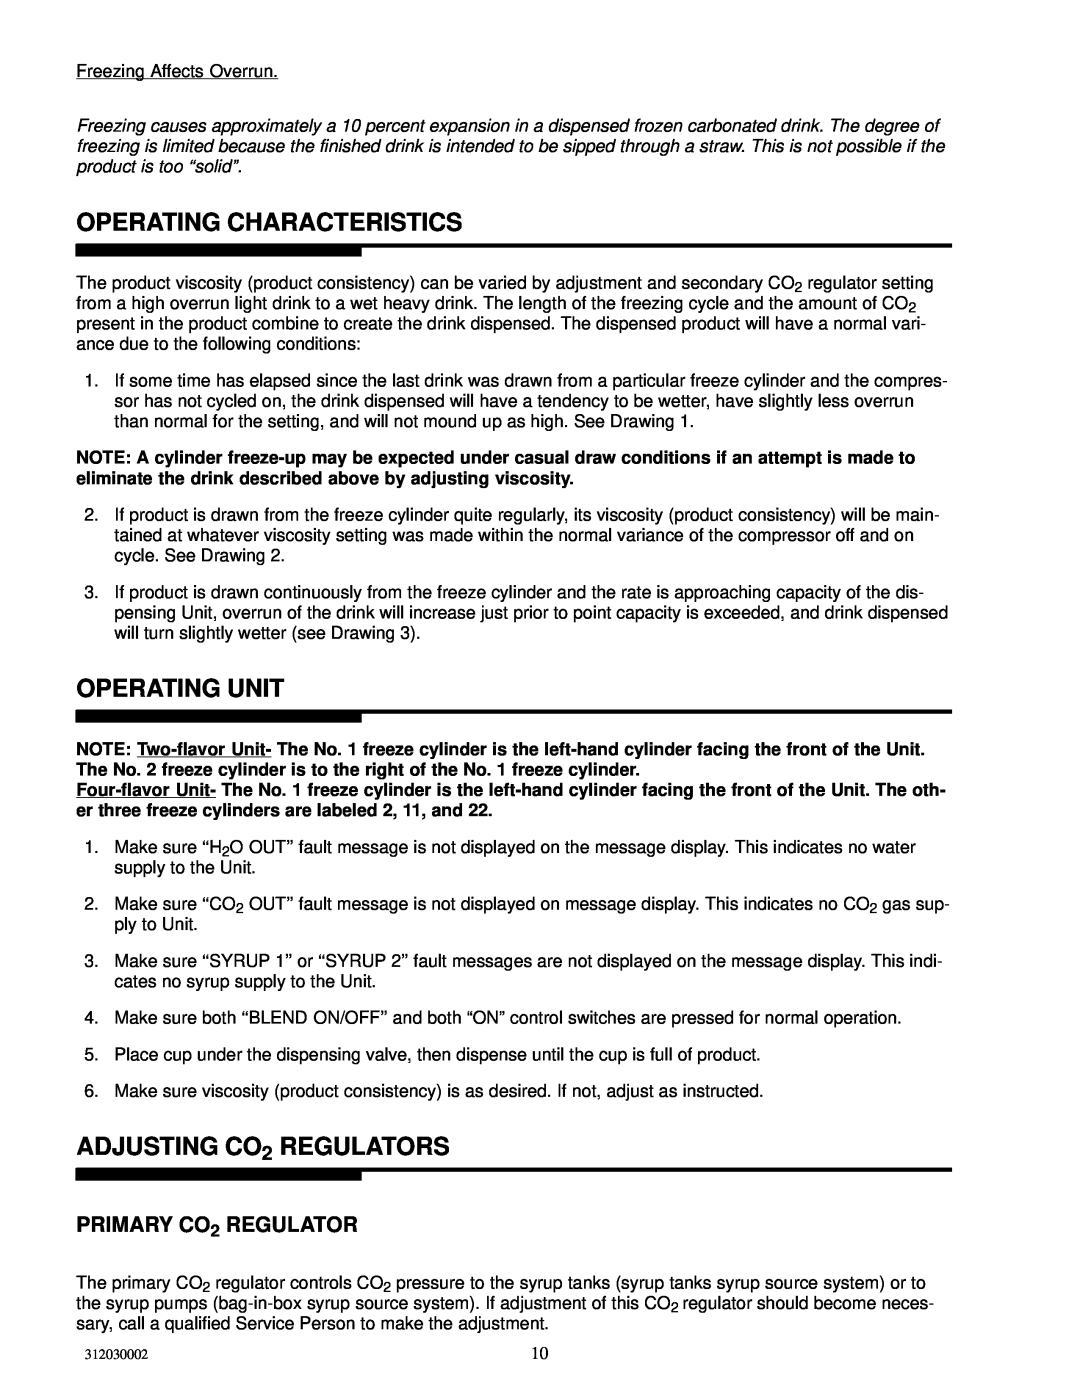 Cornelius R-404A manual Operating Characteristics, Operating Unit, ADJUSTING CO2 REGULATORS, PRIMARY CO2 REGULATOR 